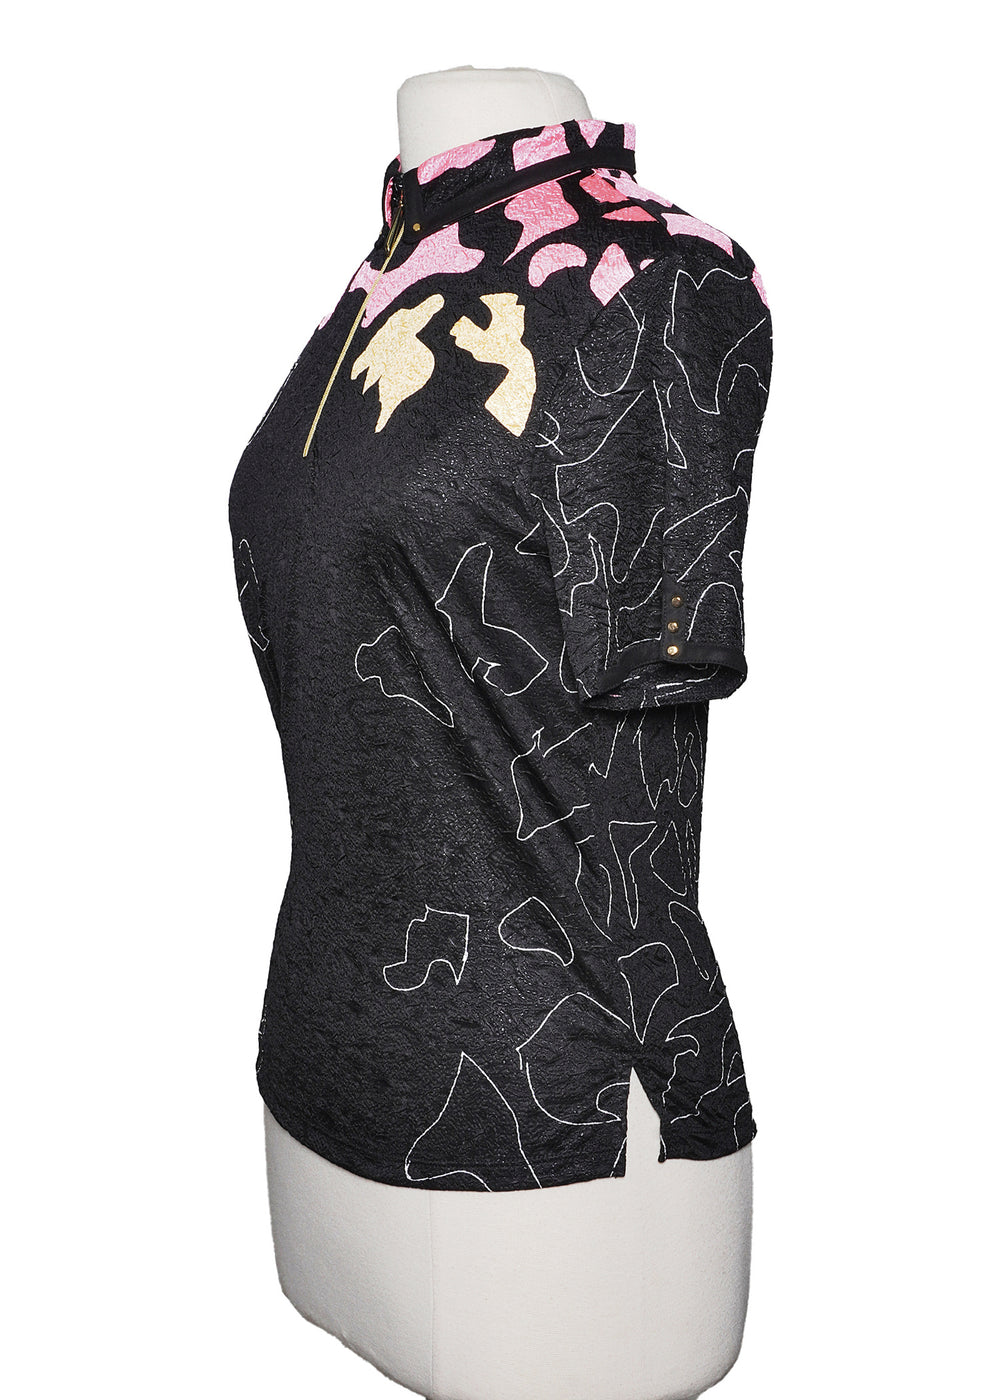 Jaime Sadock Short Sleeve Polo Top - Black/Pink - Size Medium - Skorzie